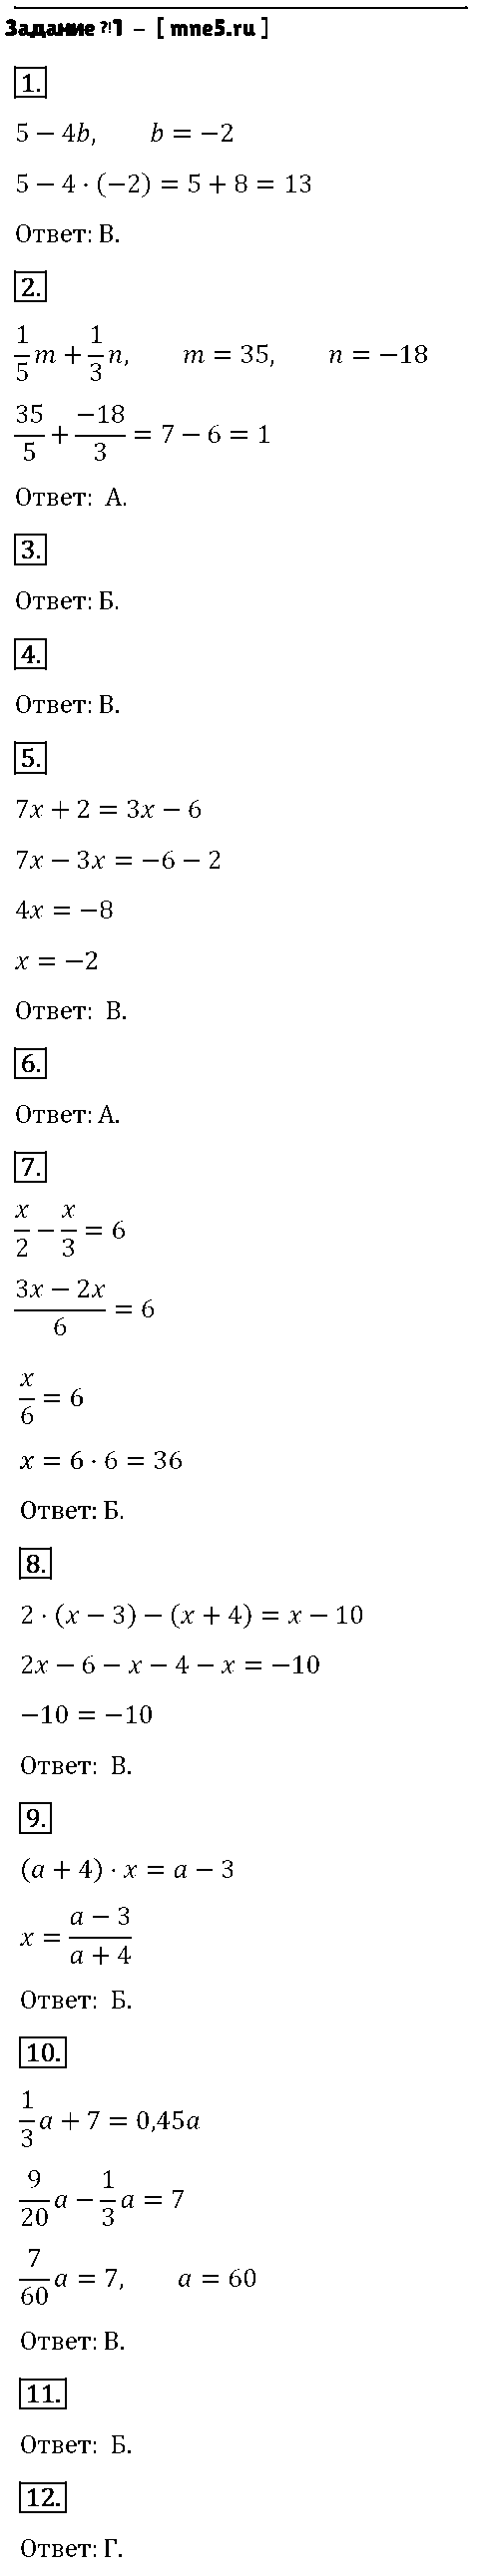 ГДЗ Алгебра 7 класс - Задание №1